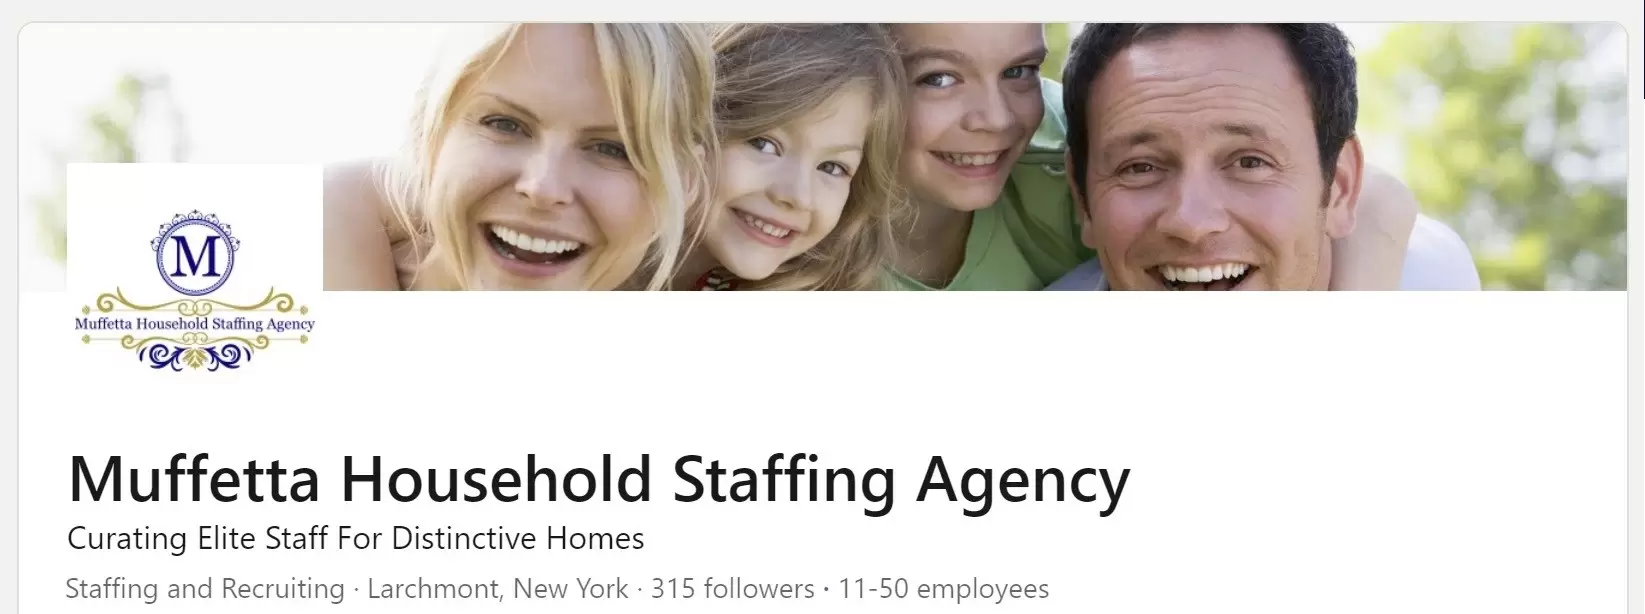 Muffetta Household Staffing Agency on LinkedIn